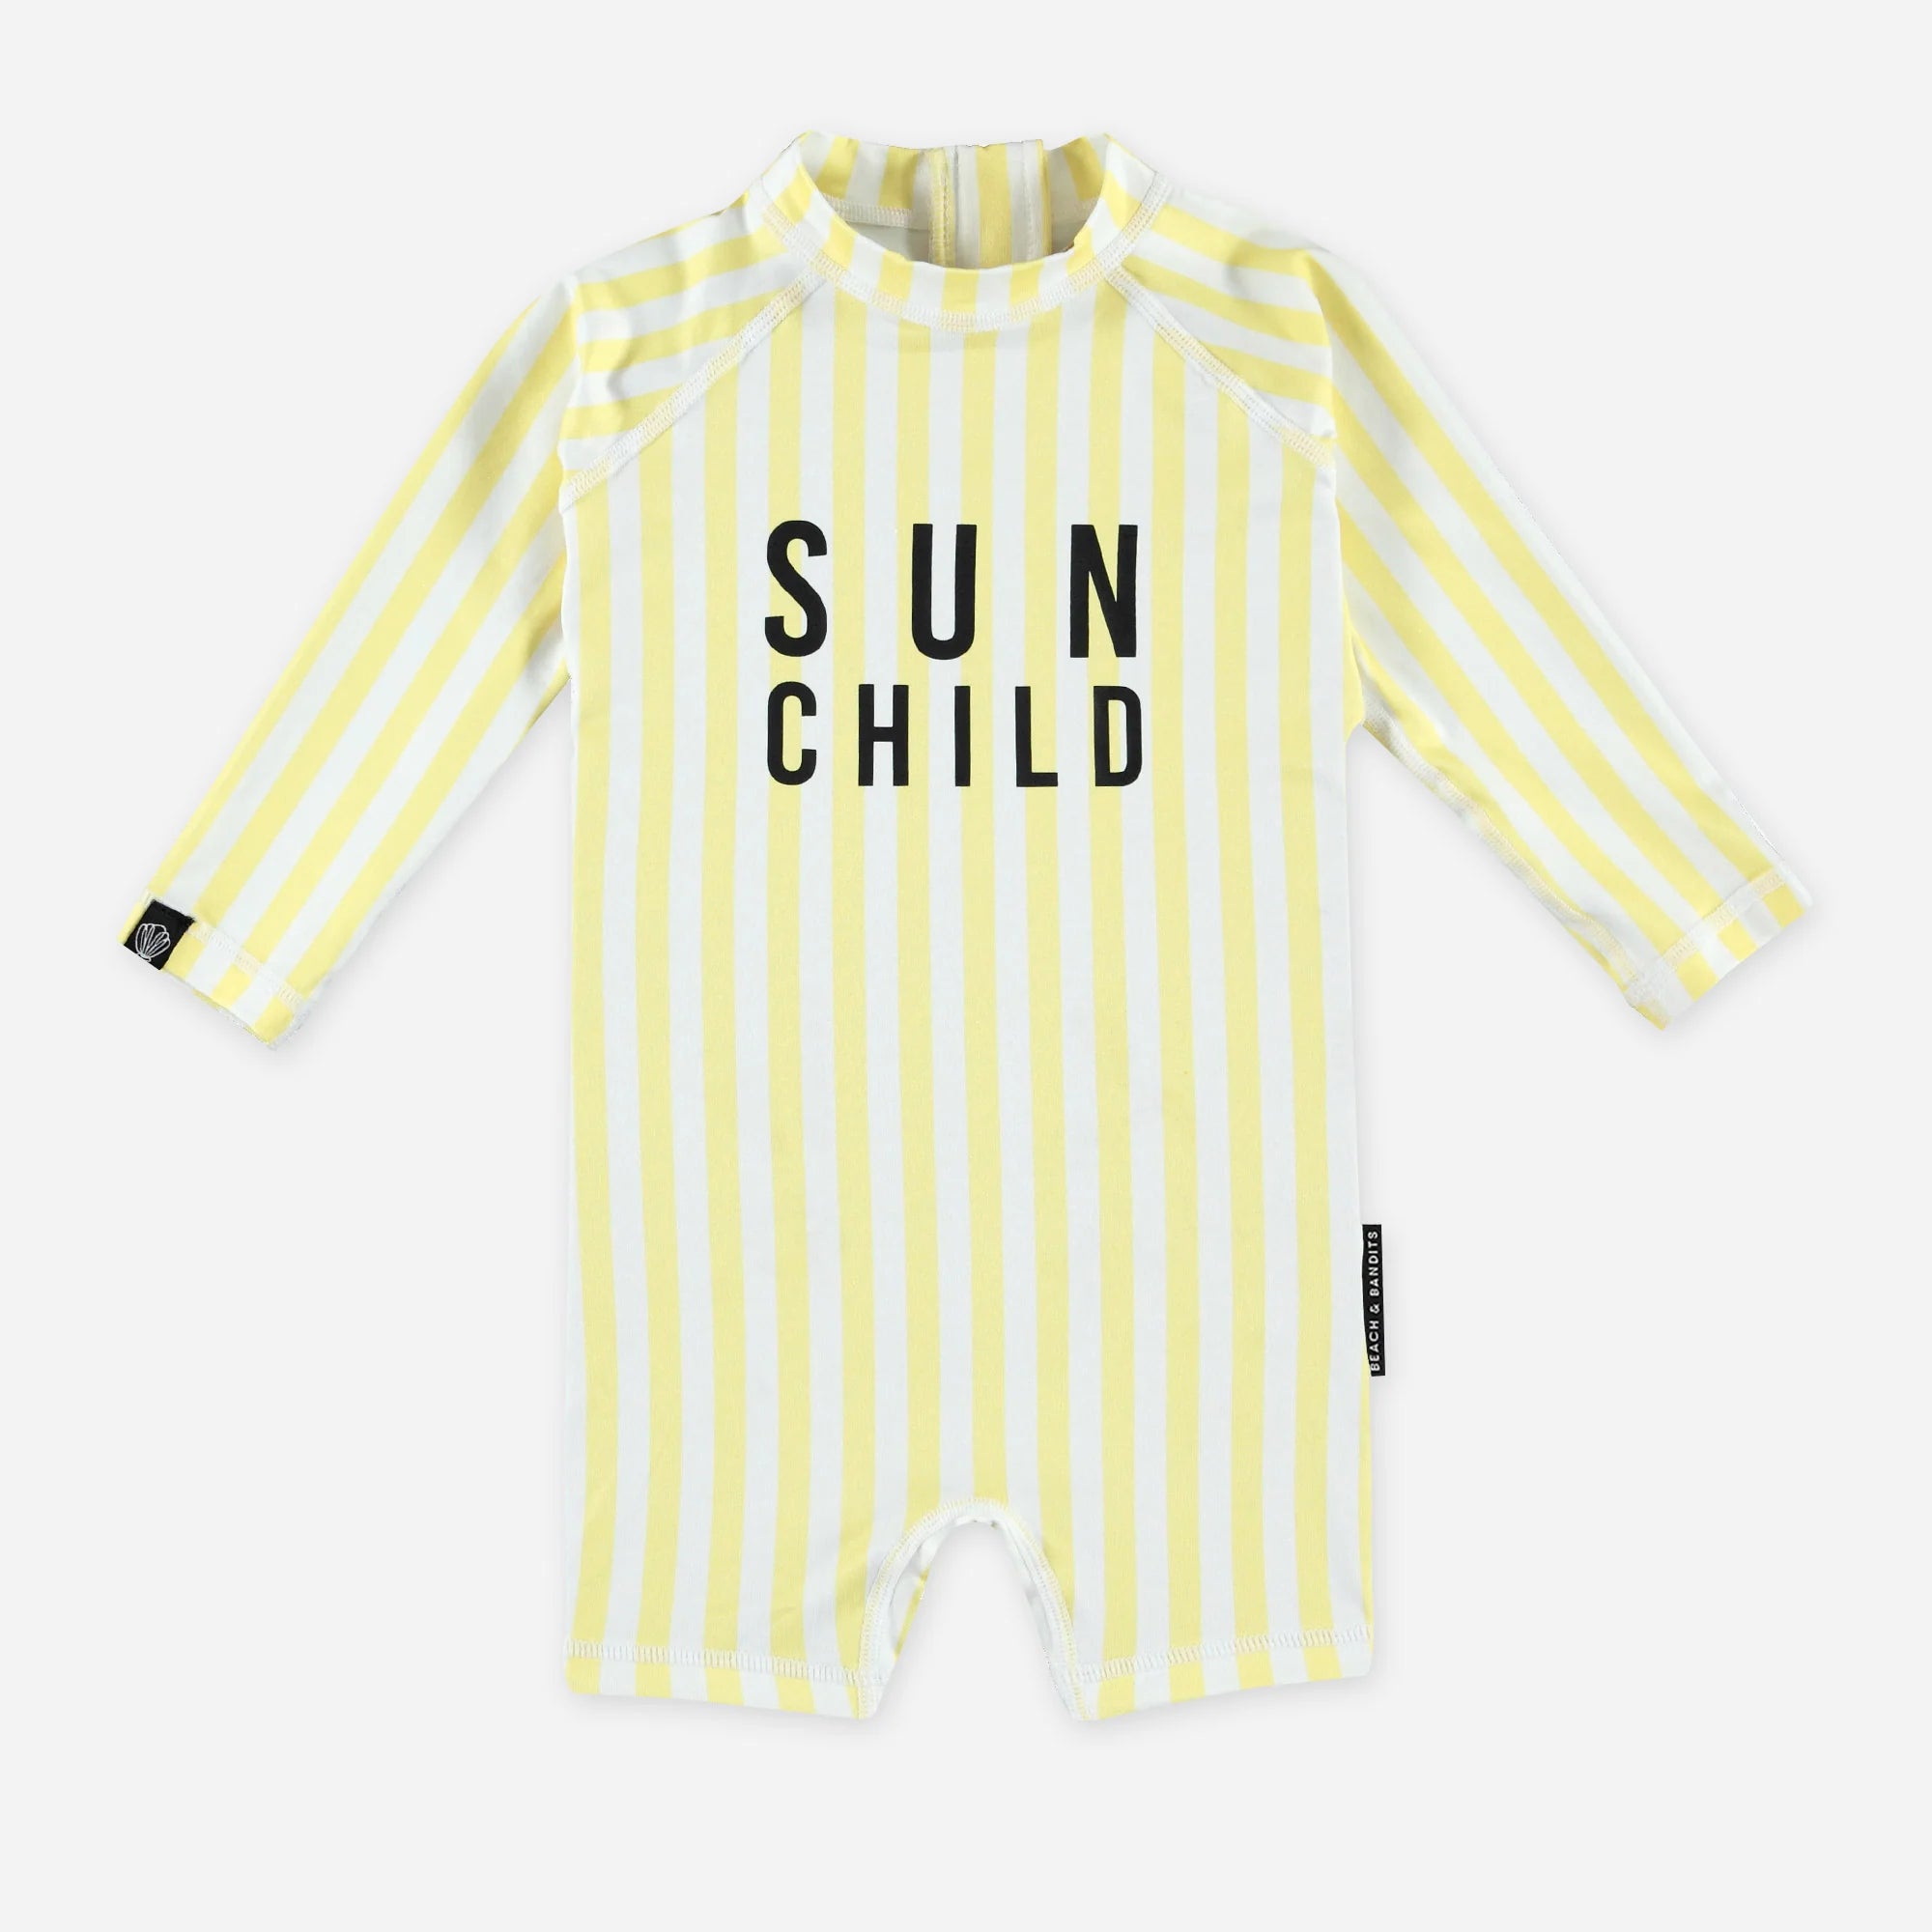 Beach & Bandits - "Sun Child" swimsuit